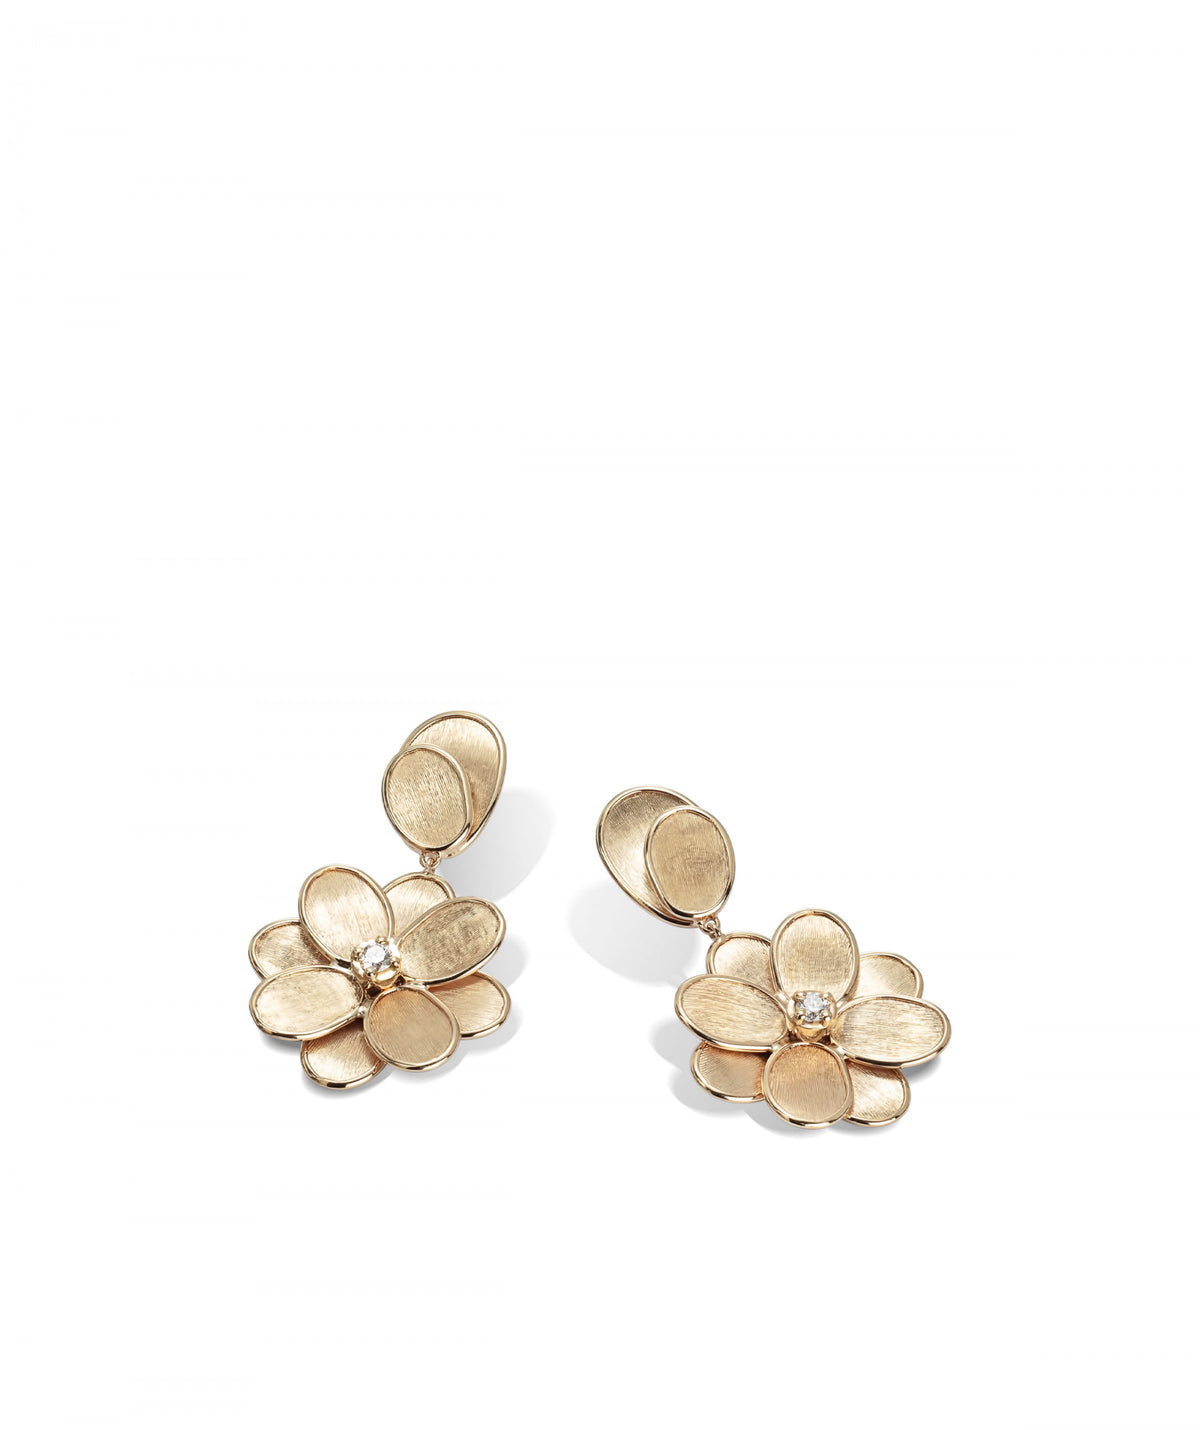 Petali Drop Earrings in 18k Yellow Gold with Diamonds - Orsini Jewellers NZ